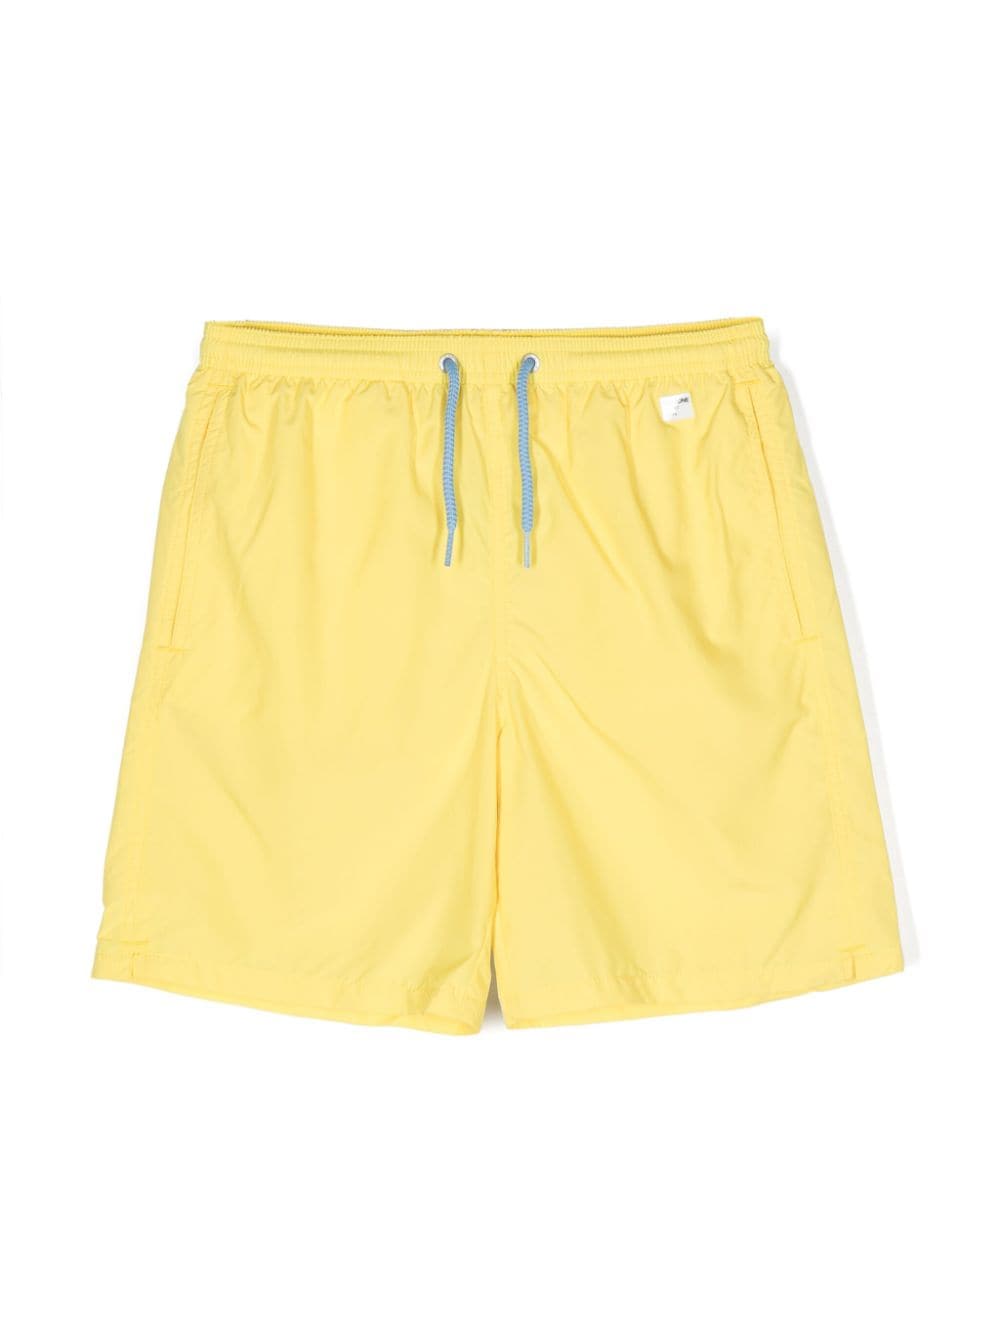 MC2 Saint Barth Kids x Pantone Jean Lighting swim shorts - Yellow von MC2 Saint Barth Kids